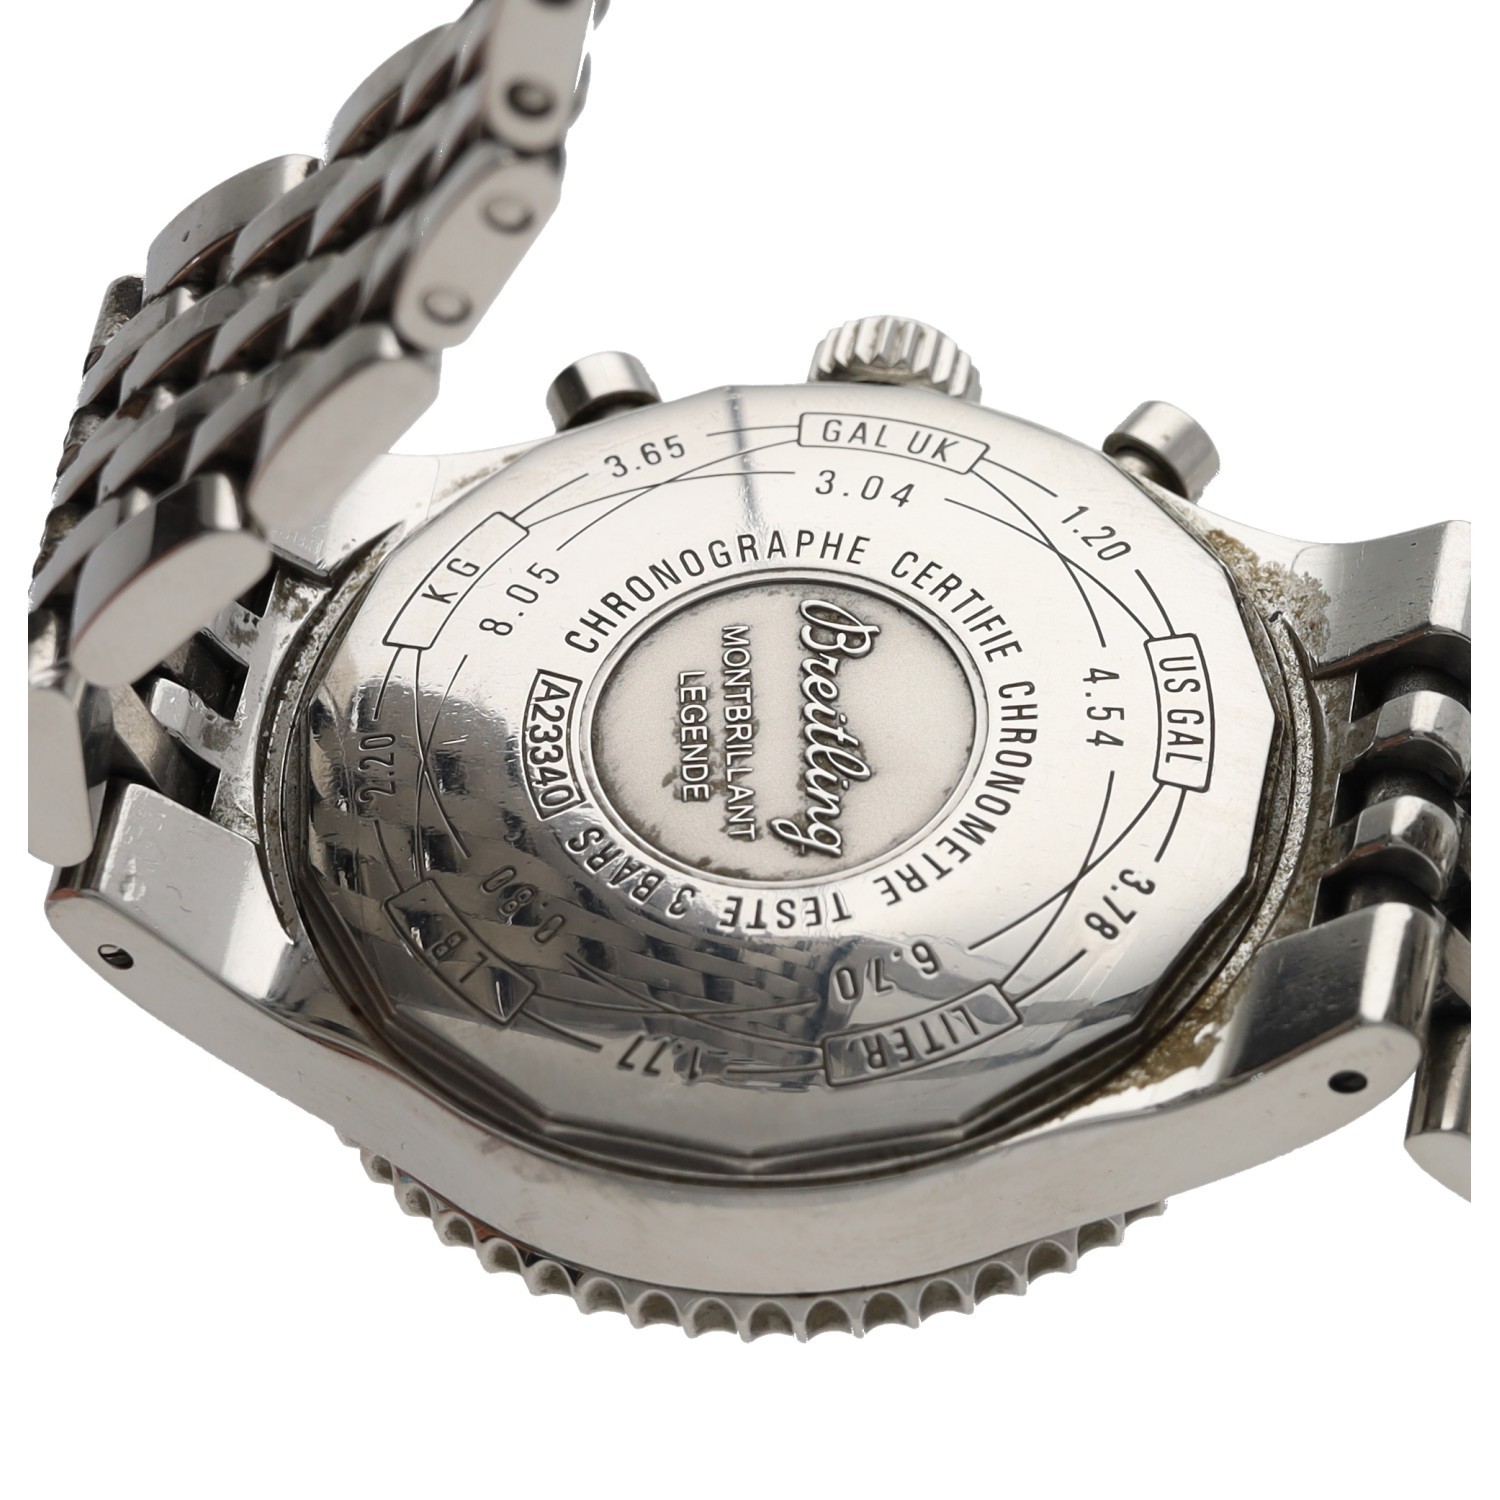 Breitling Montebrillant Legende Chronographe automatic stainless steel gentleman's wristwatch, - Image 2 of 2